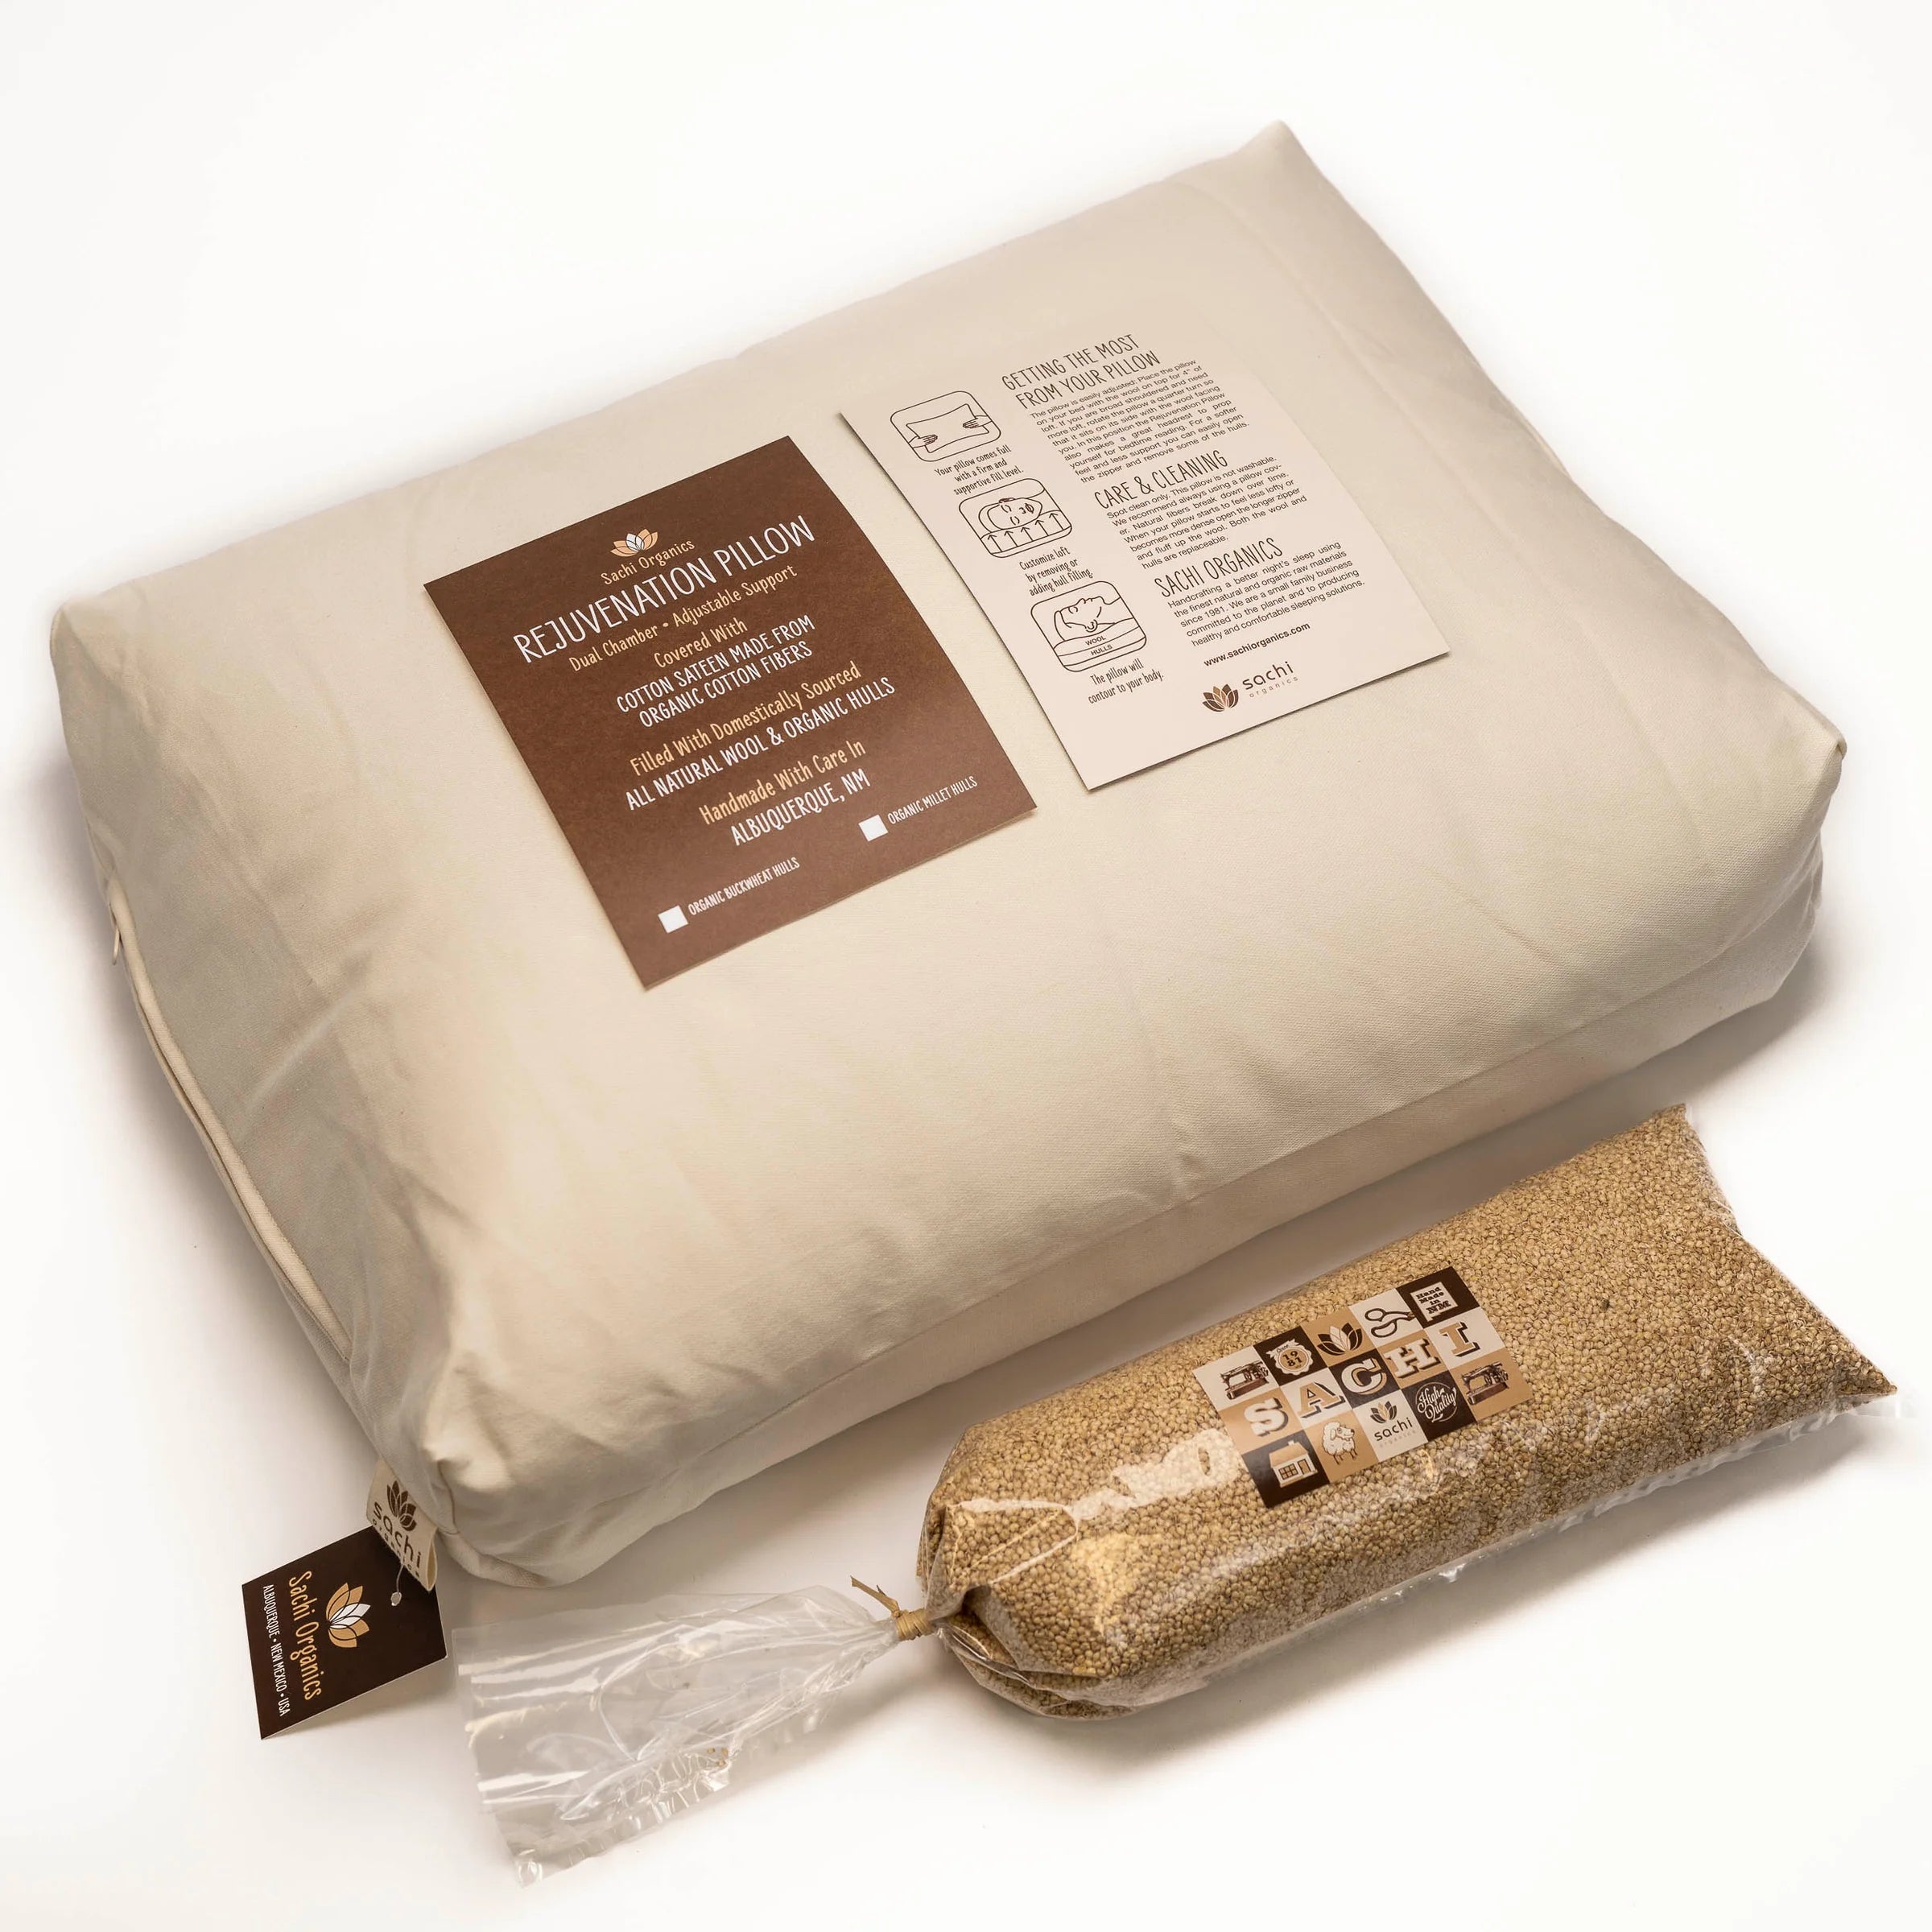 Standard Pillow, USA Organic Cotton with Flex-Fill, Adjustable Loft